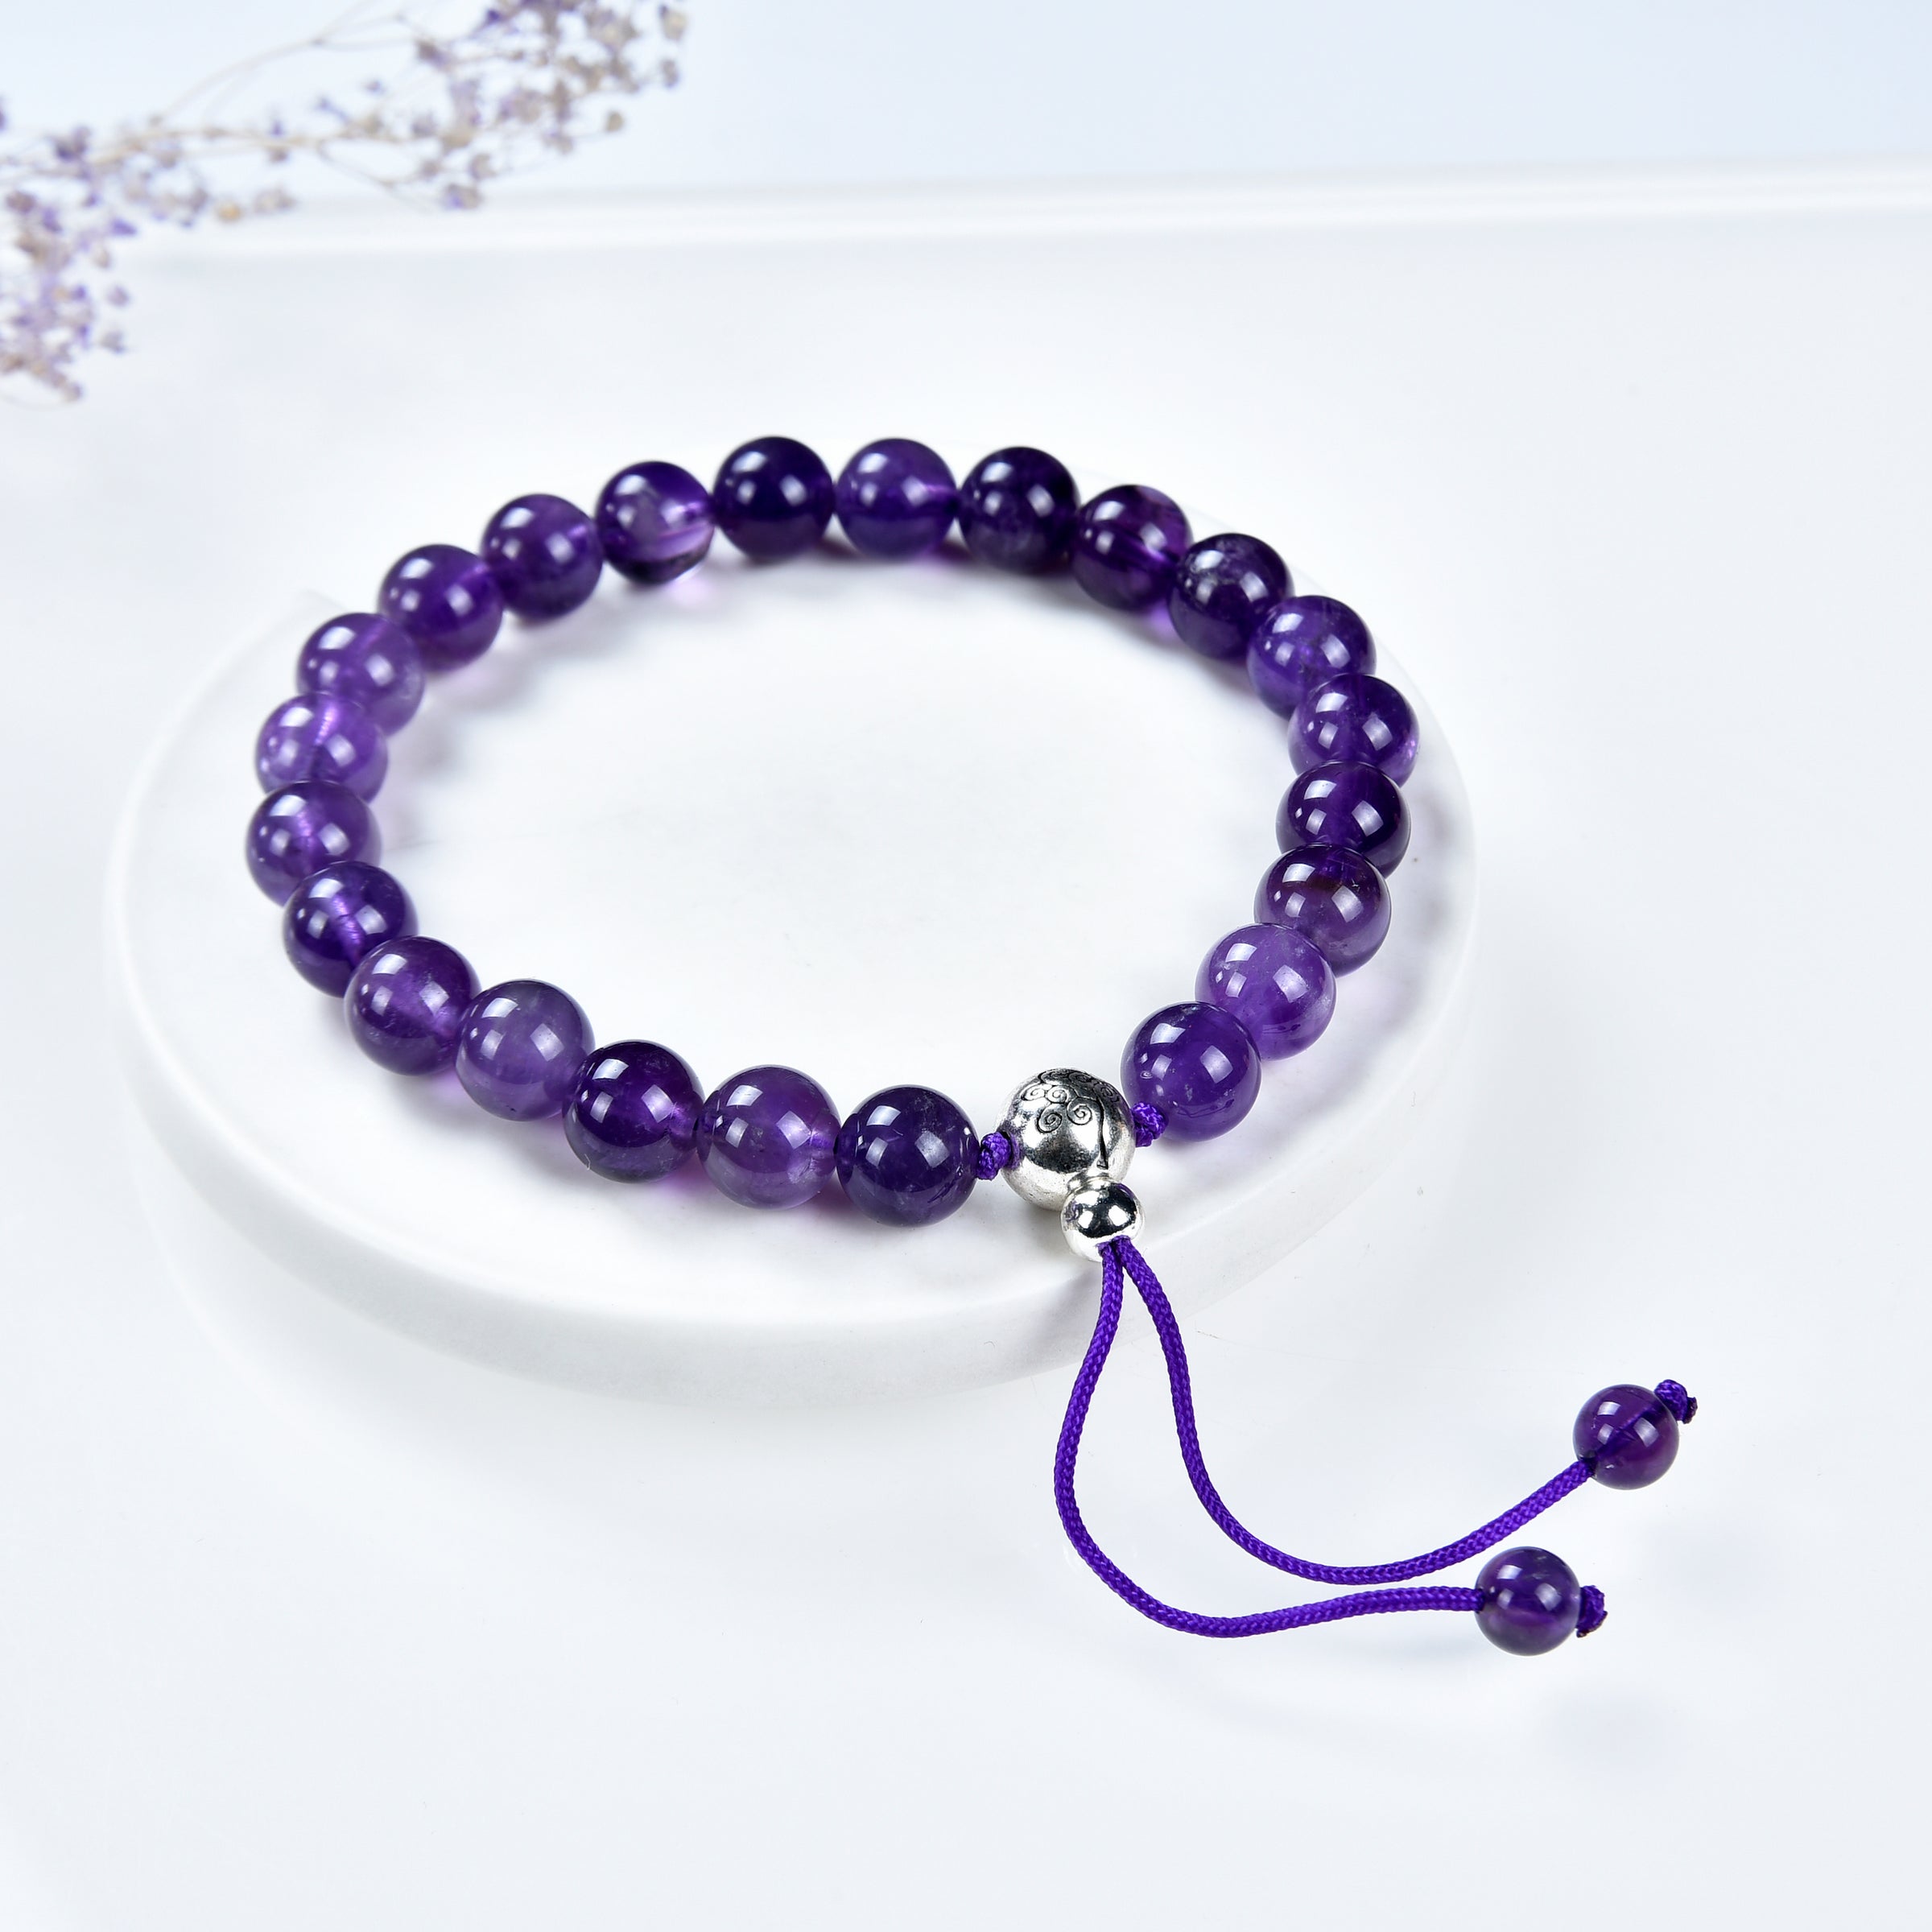 Mala Bracelet | 8mm Beads, Guru Bead, Durable Nylon Cord | Adjustable Length (Amethyst )